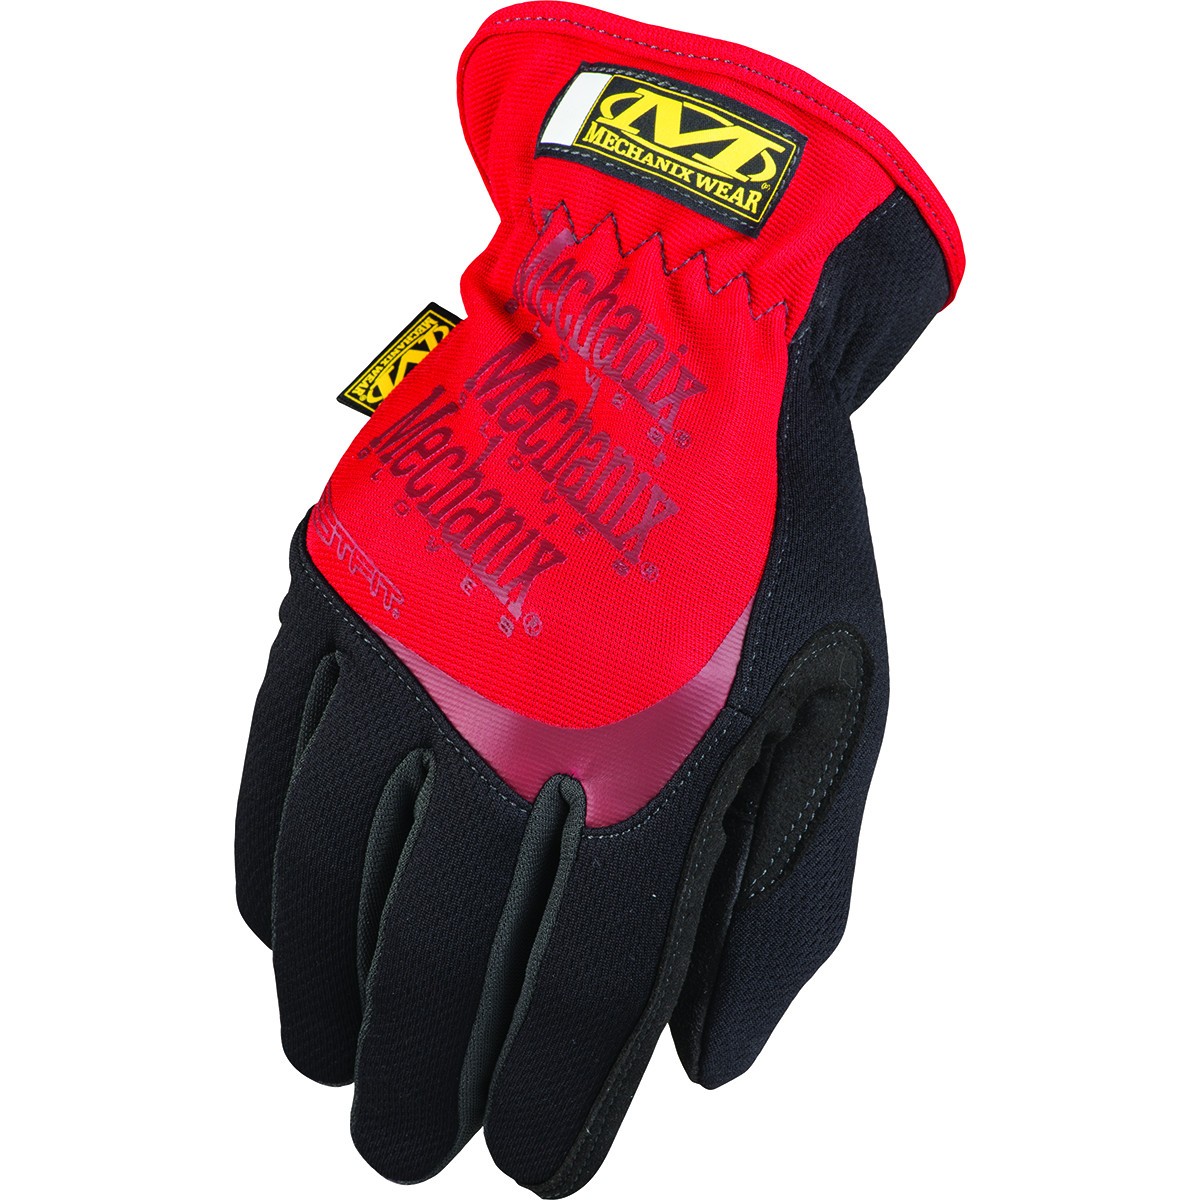 Wear gloves. Перчатки Mechanix FASTFIT. Перчатки Mechanix Cold work FASTFIT. Перчатки тактические Mechanix Wear FASTFIT mff-05-011 (XL). Cyan Mechanix Gloves.